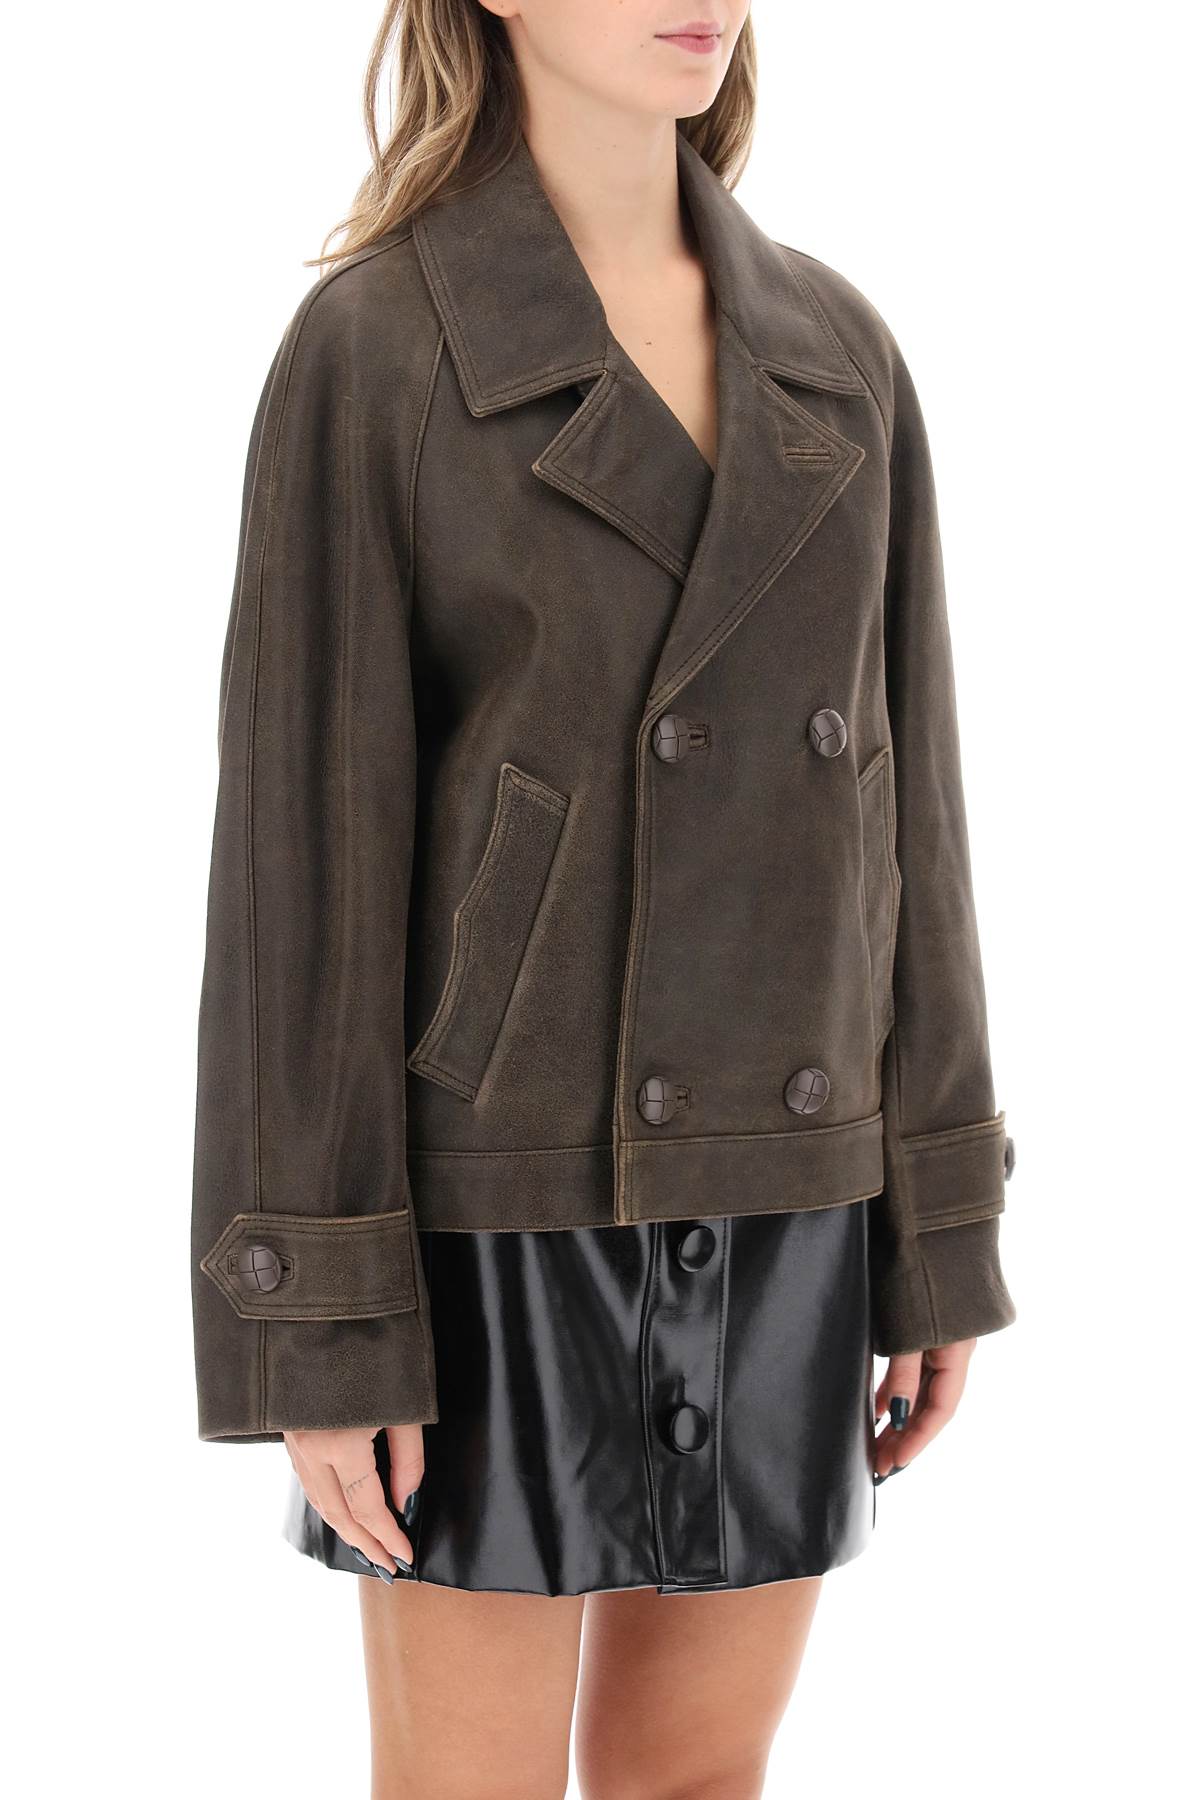 Mvp wardrobe solferino jacket in vintage-effect leather-1